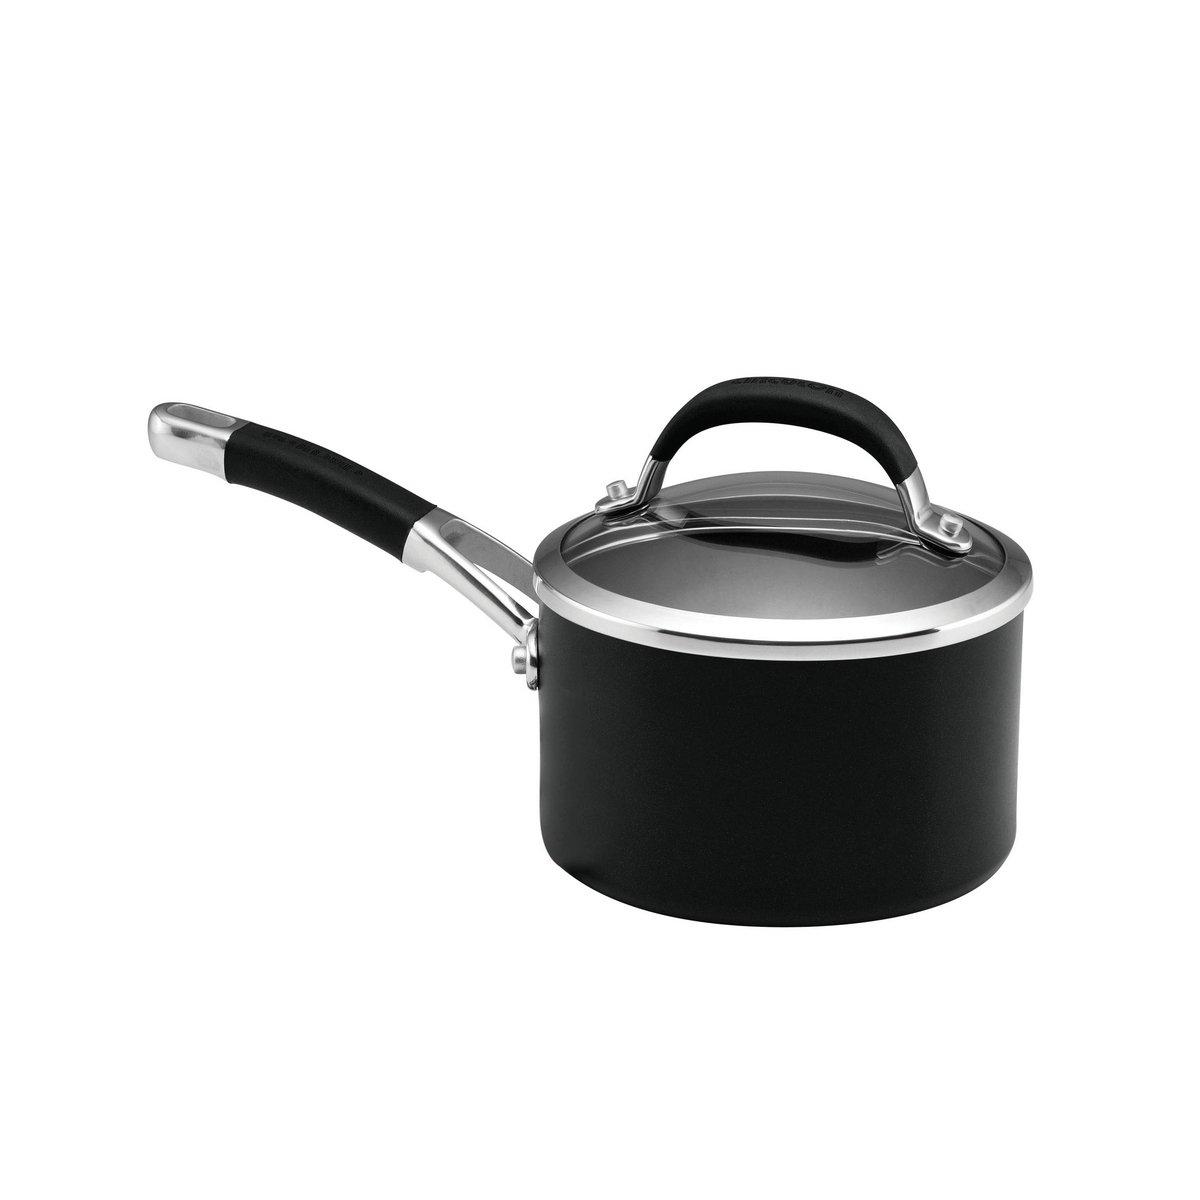 Black 'Premier Professional' Round Non Stick Cookware Saucepan - 18cm